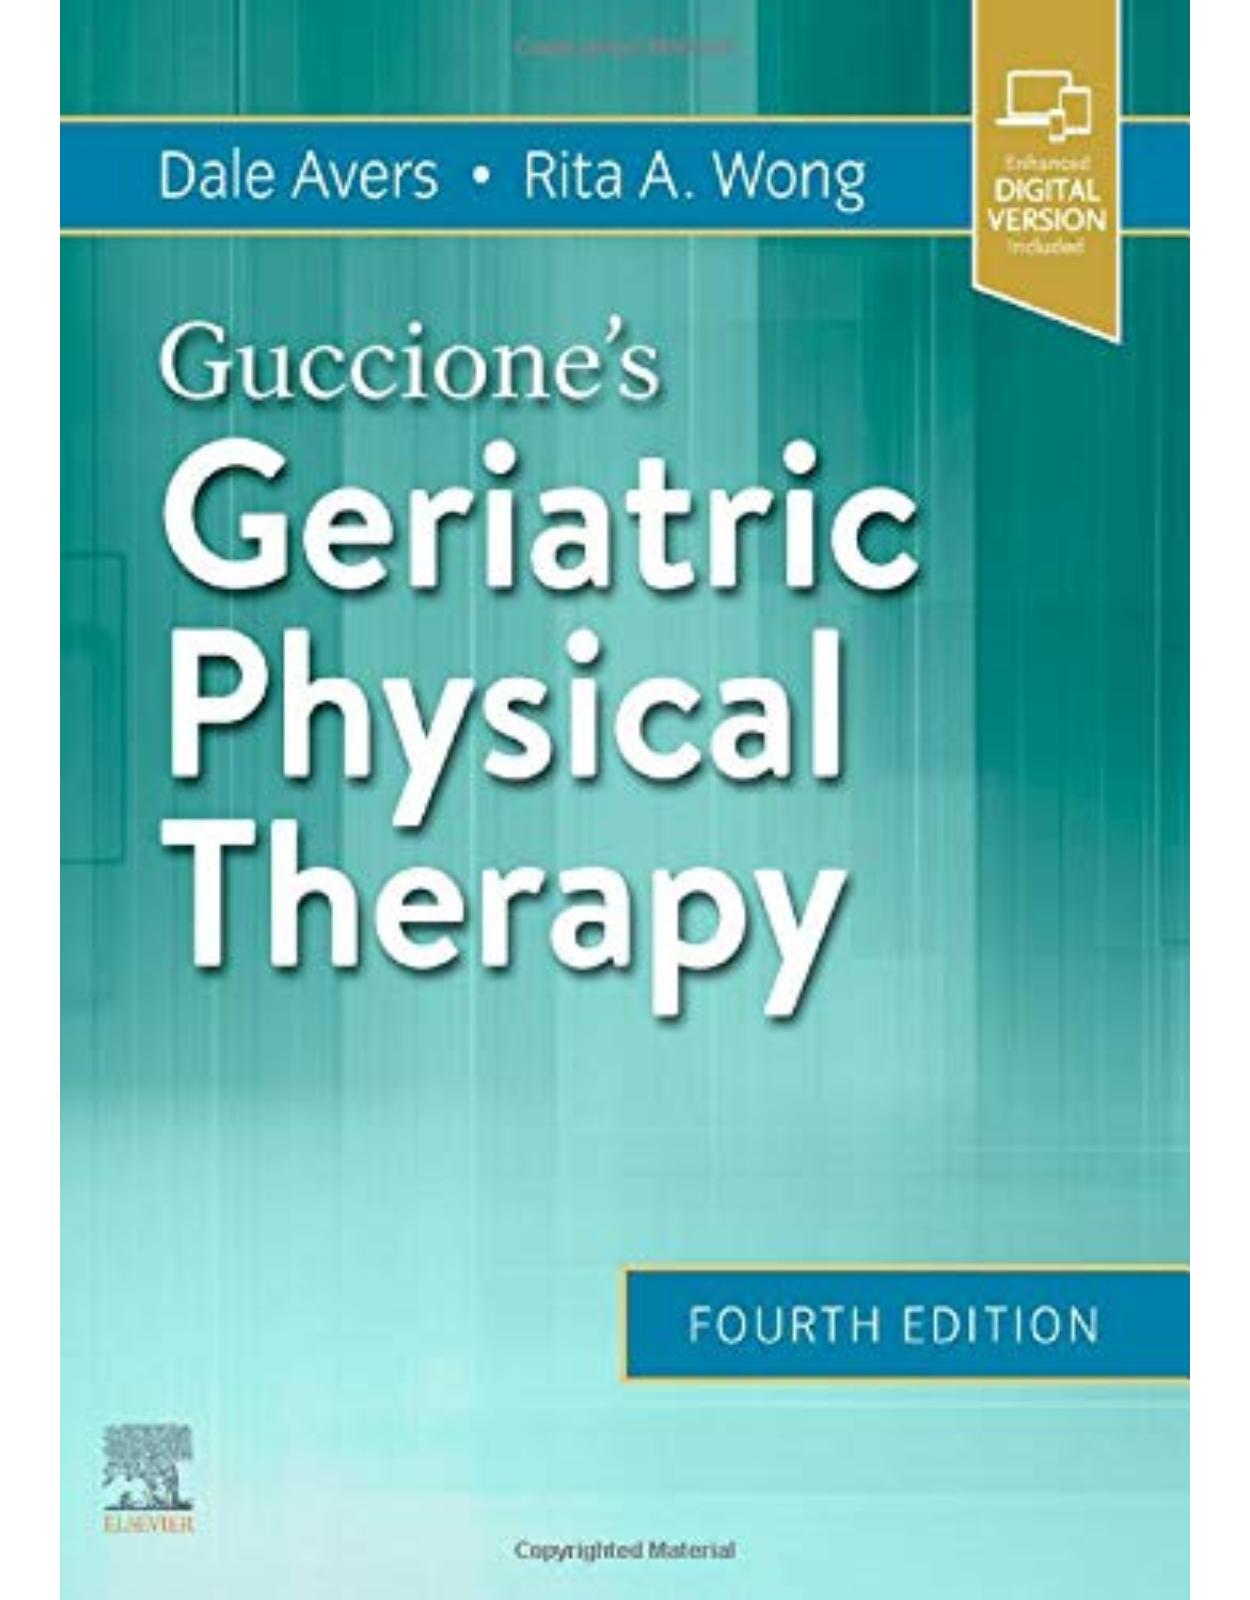 Guccione's Geriatric Physical Therapy, 4th�Edition